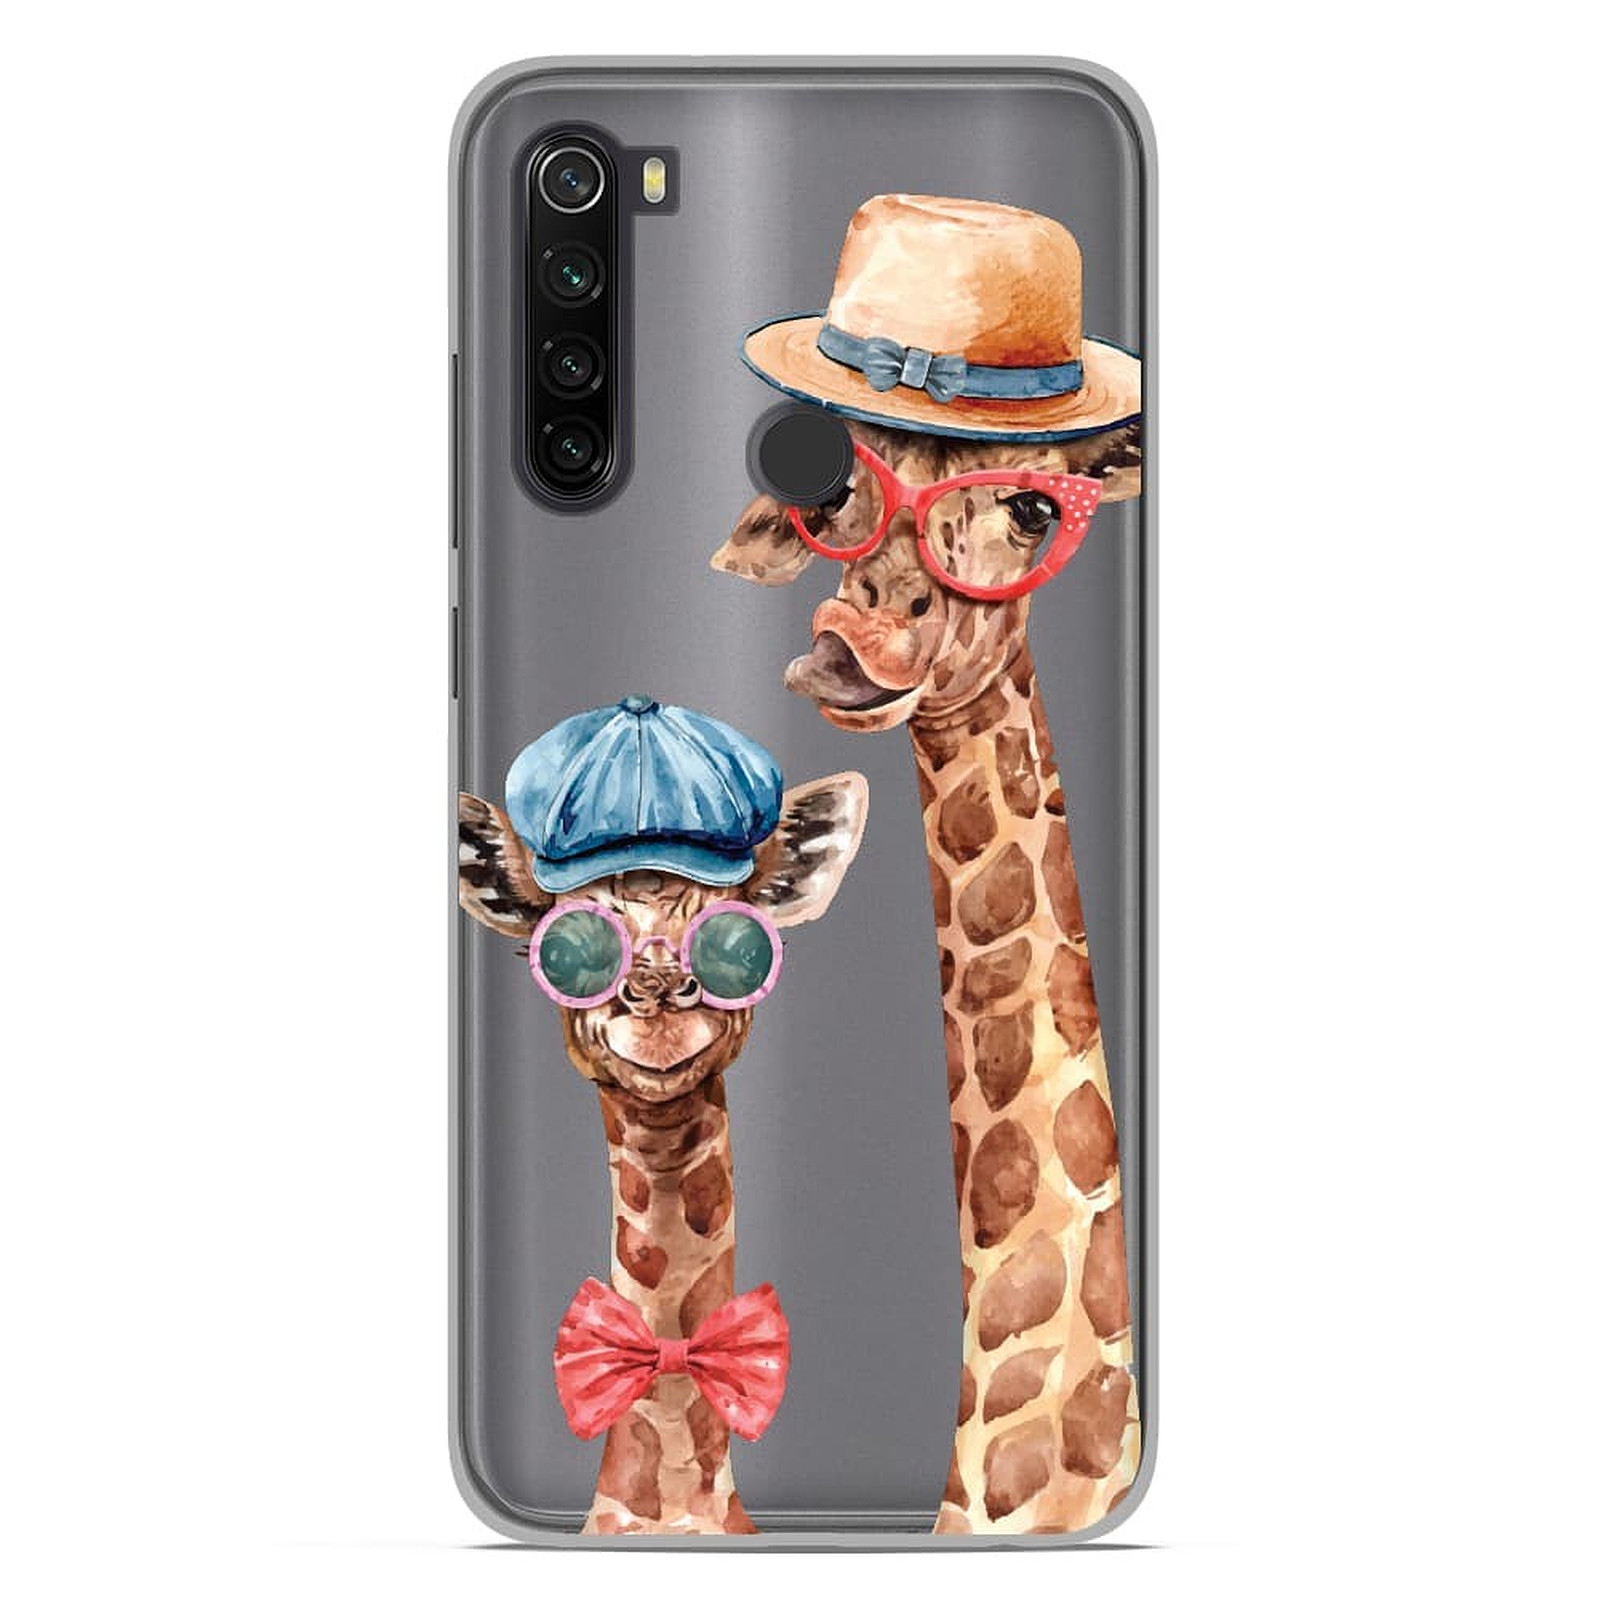 1001 Coques Coque silicone gel Xiaomi Redmi Note 8 motif Funny Girafe - Coque telephone 1001Coques